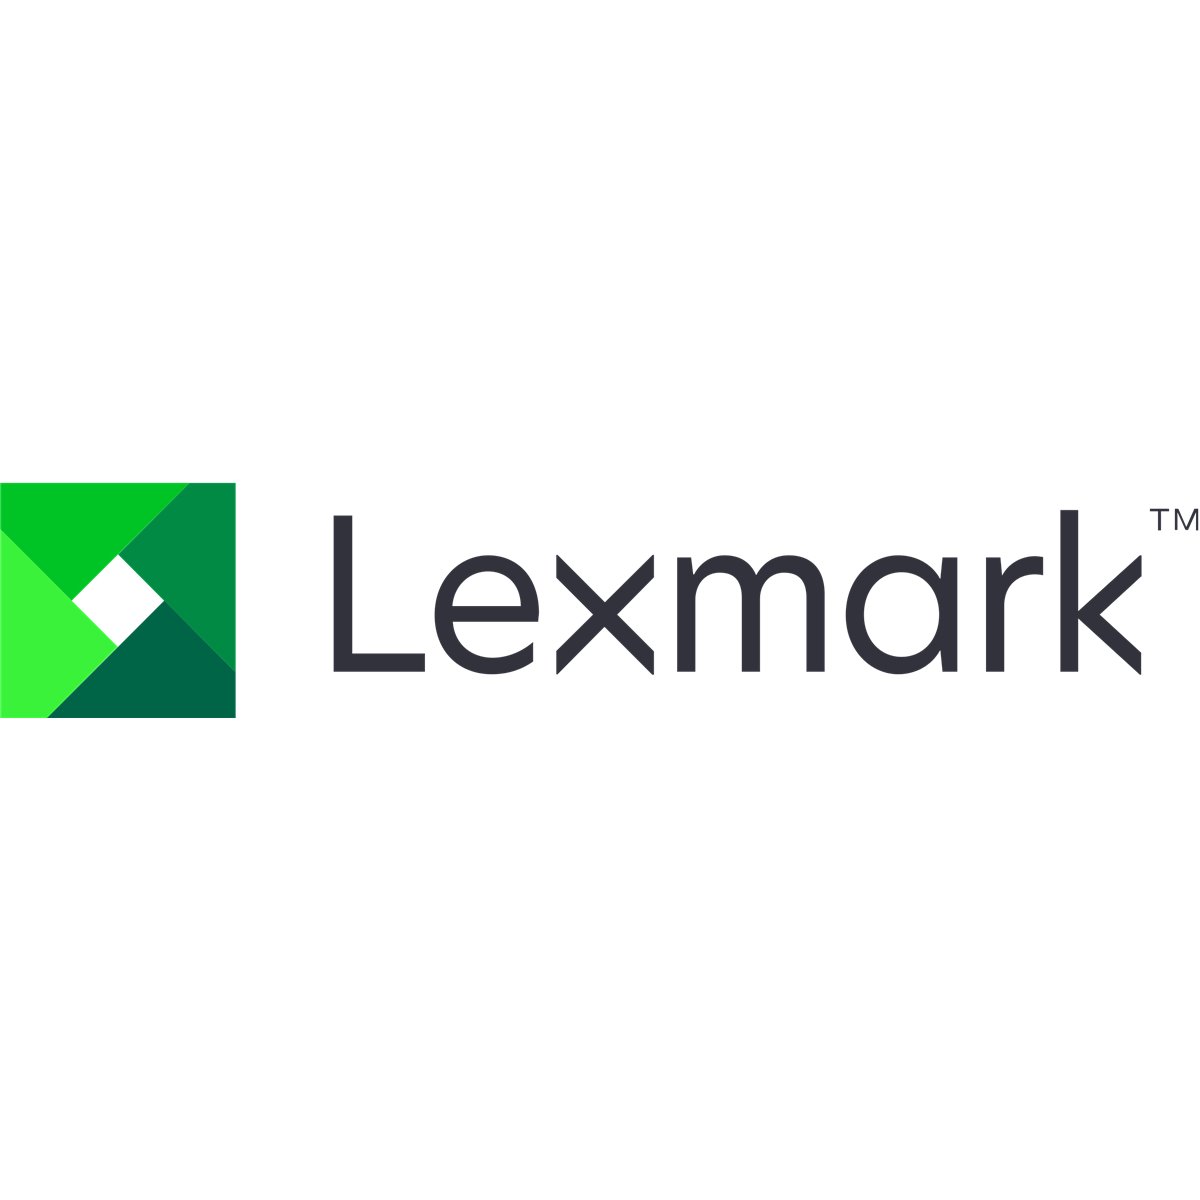 Lexmark SVC Tray Insert Sheet Assembly - 550 sheet